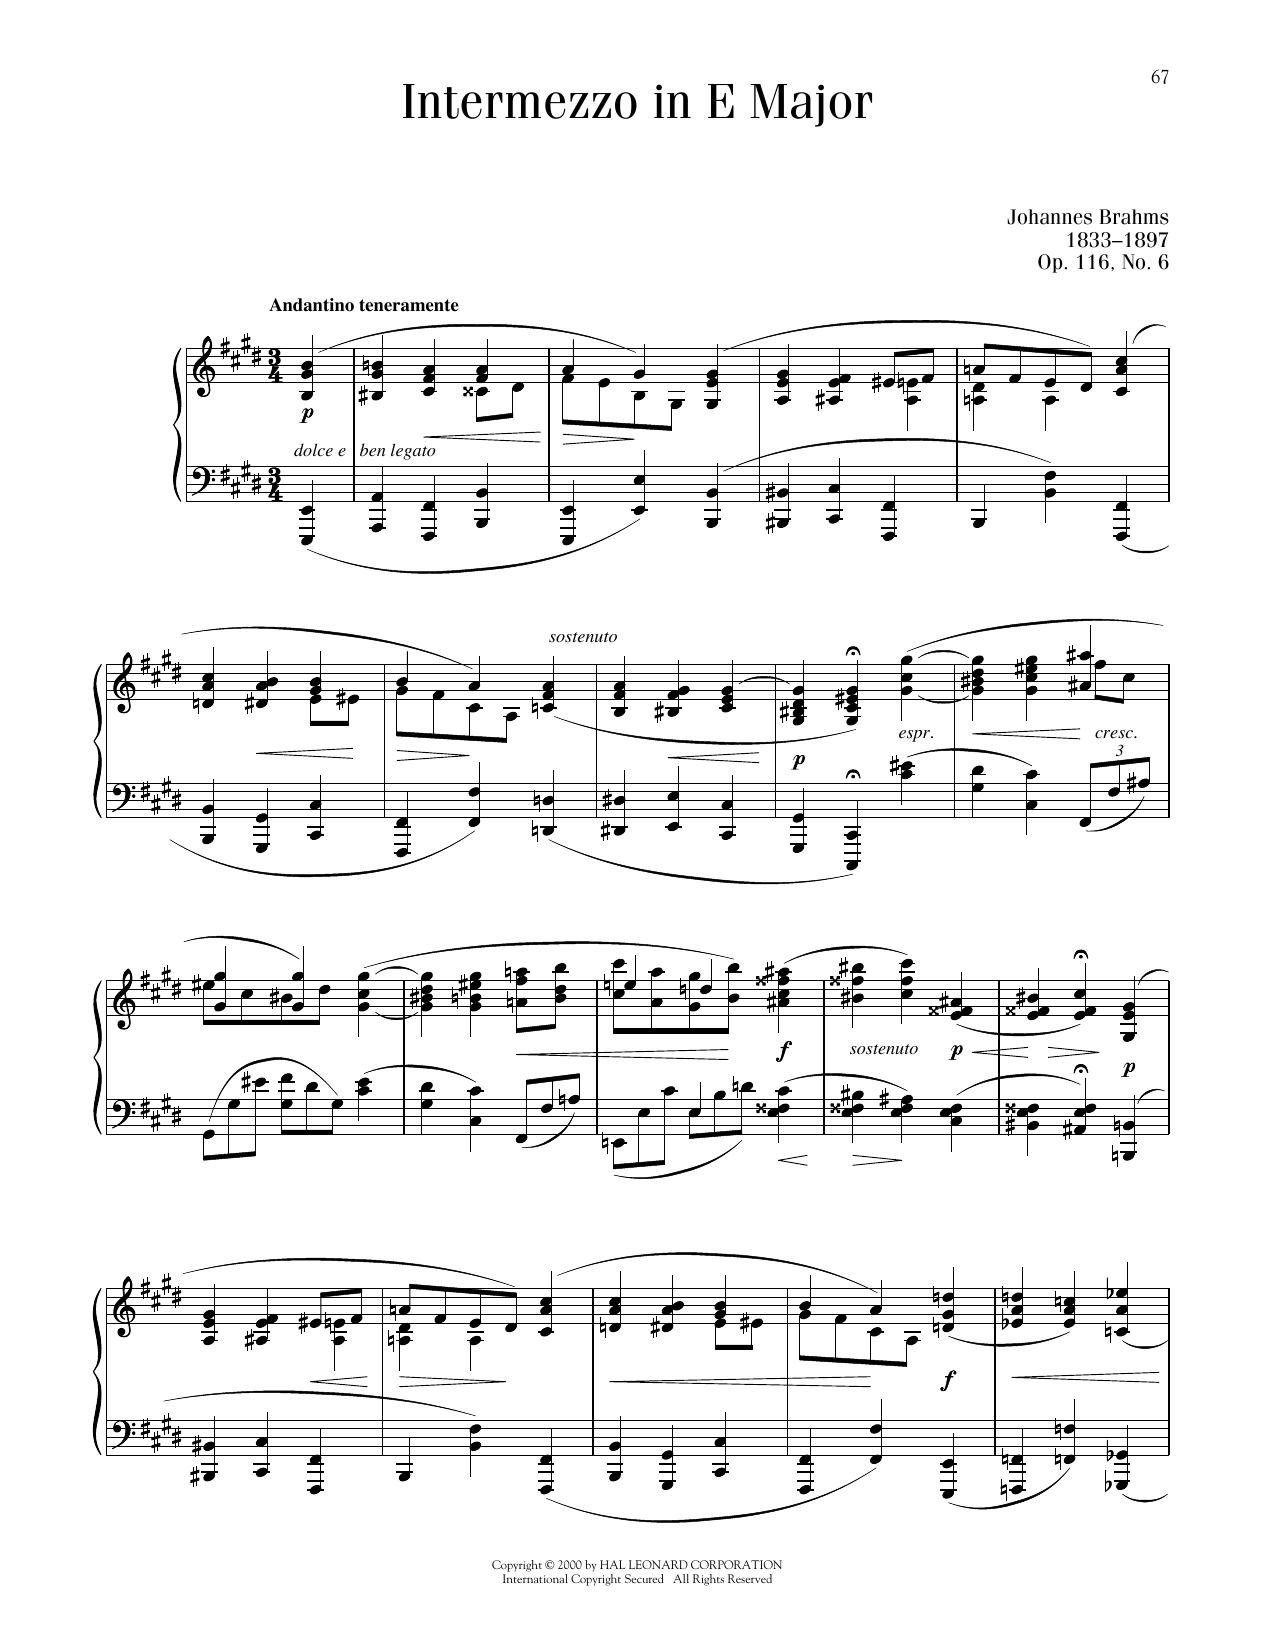 Johannes Brahms Intermezzo In E Major, Op. 116, No. 6 sheet music notes printable PDF score